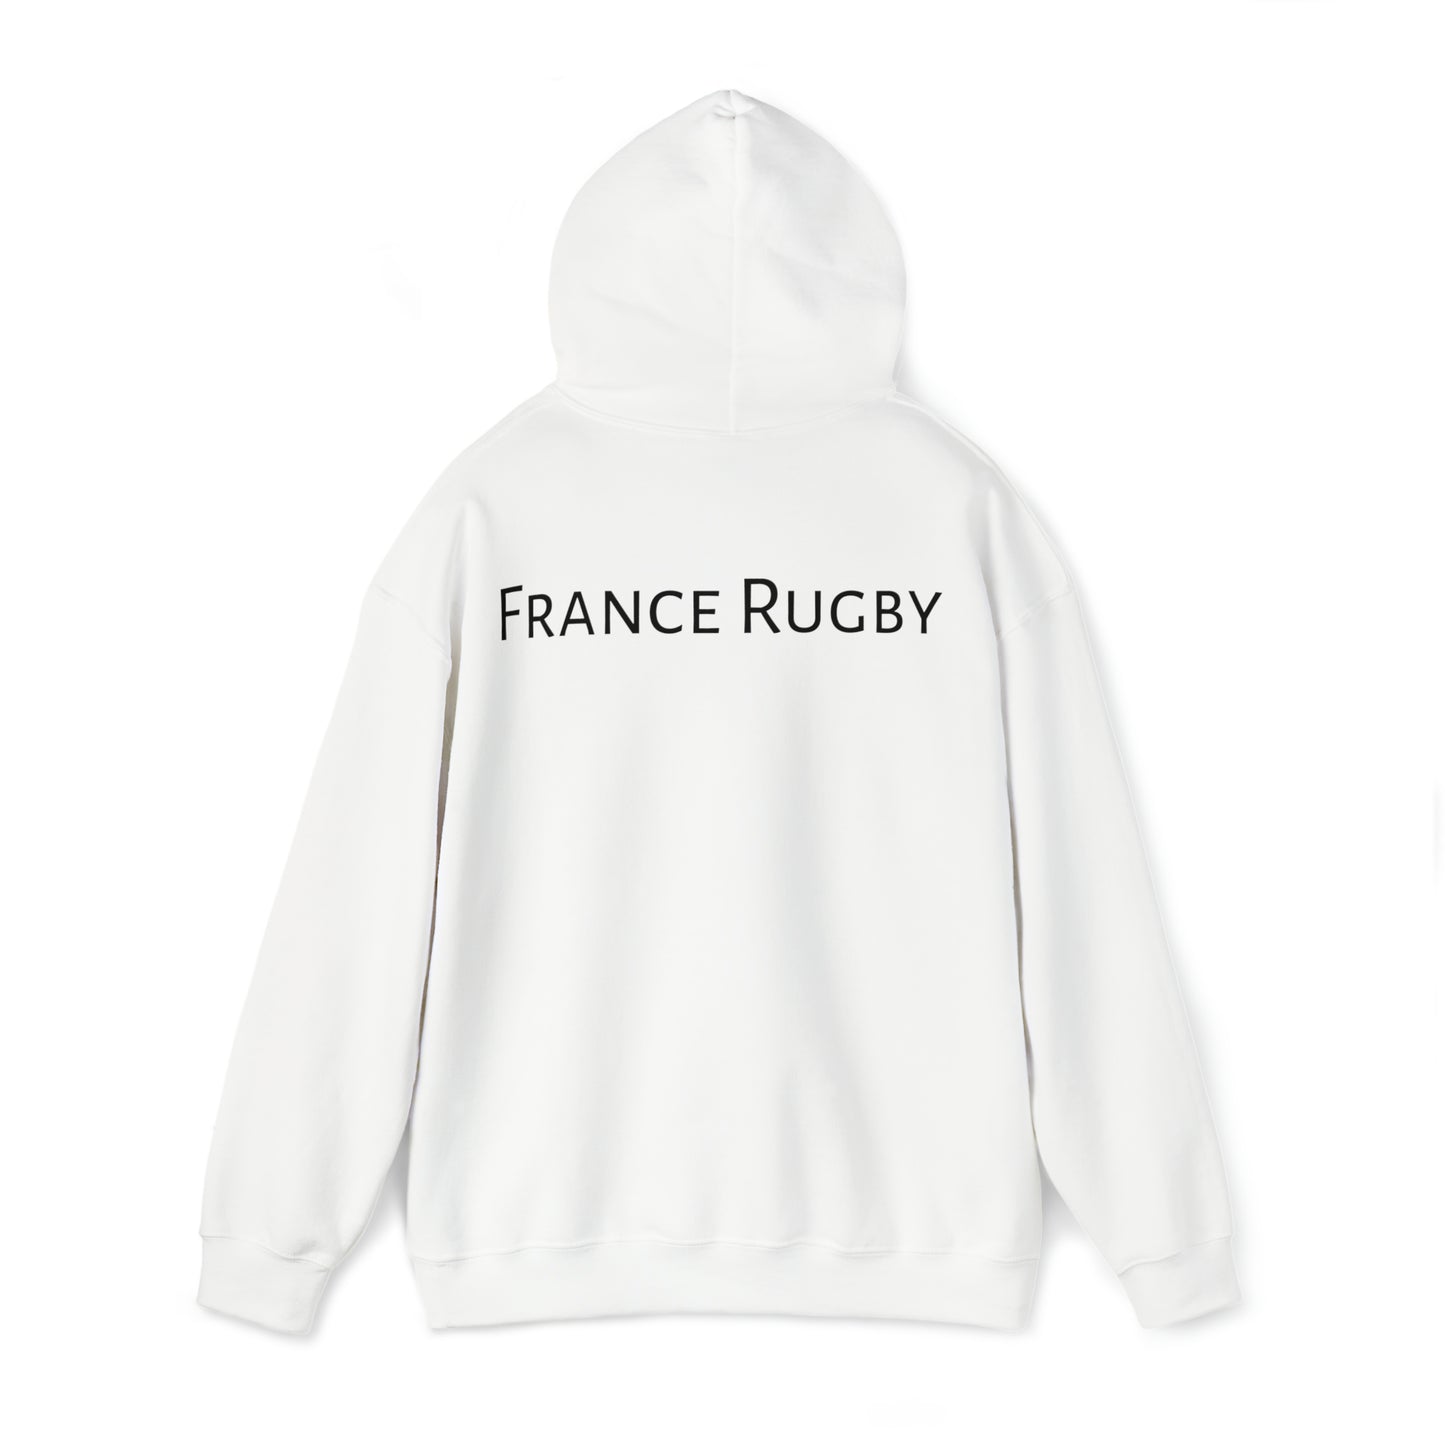 Ready France - light hoodies